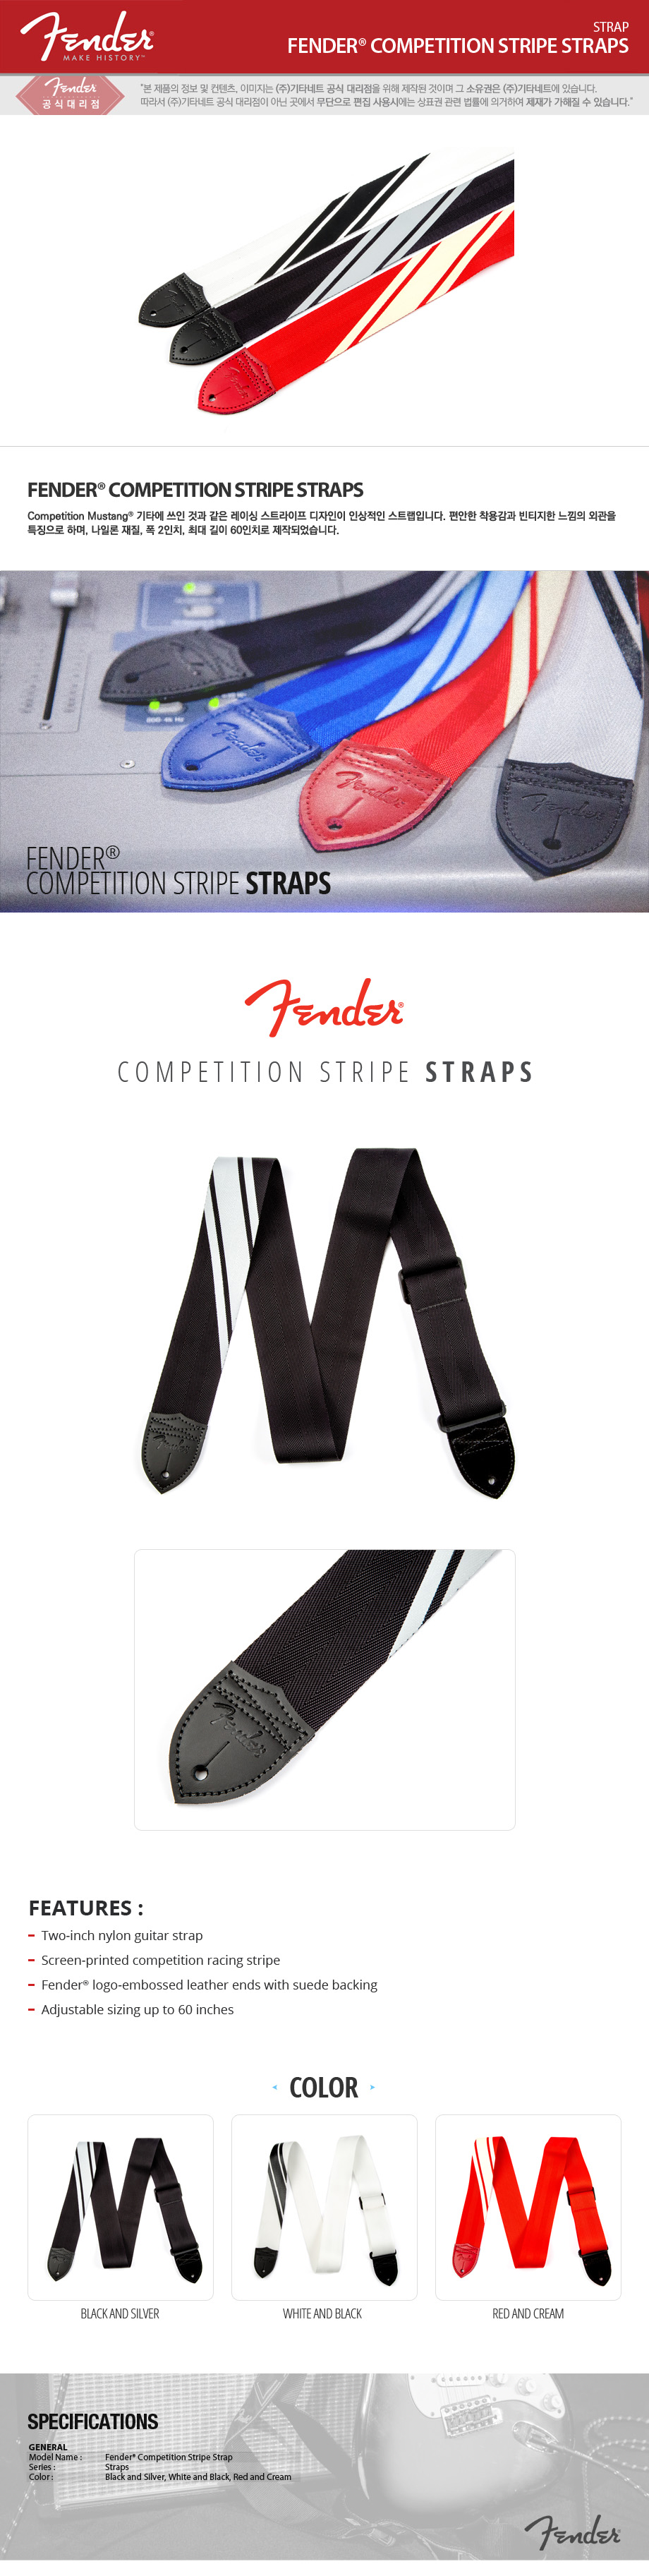 Fender_Competition_Stripe_Straps_160556.jpg